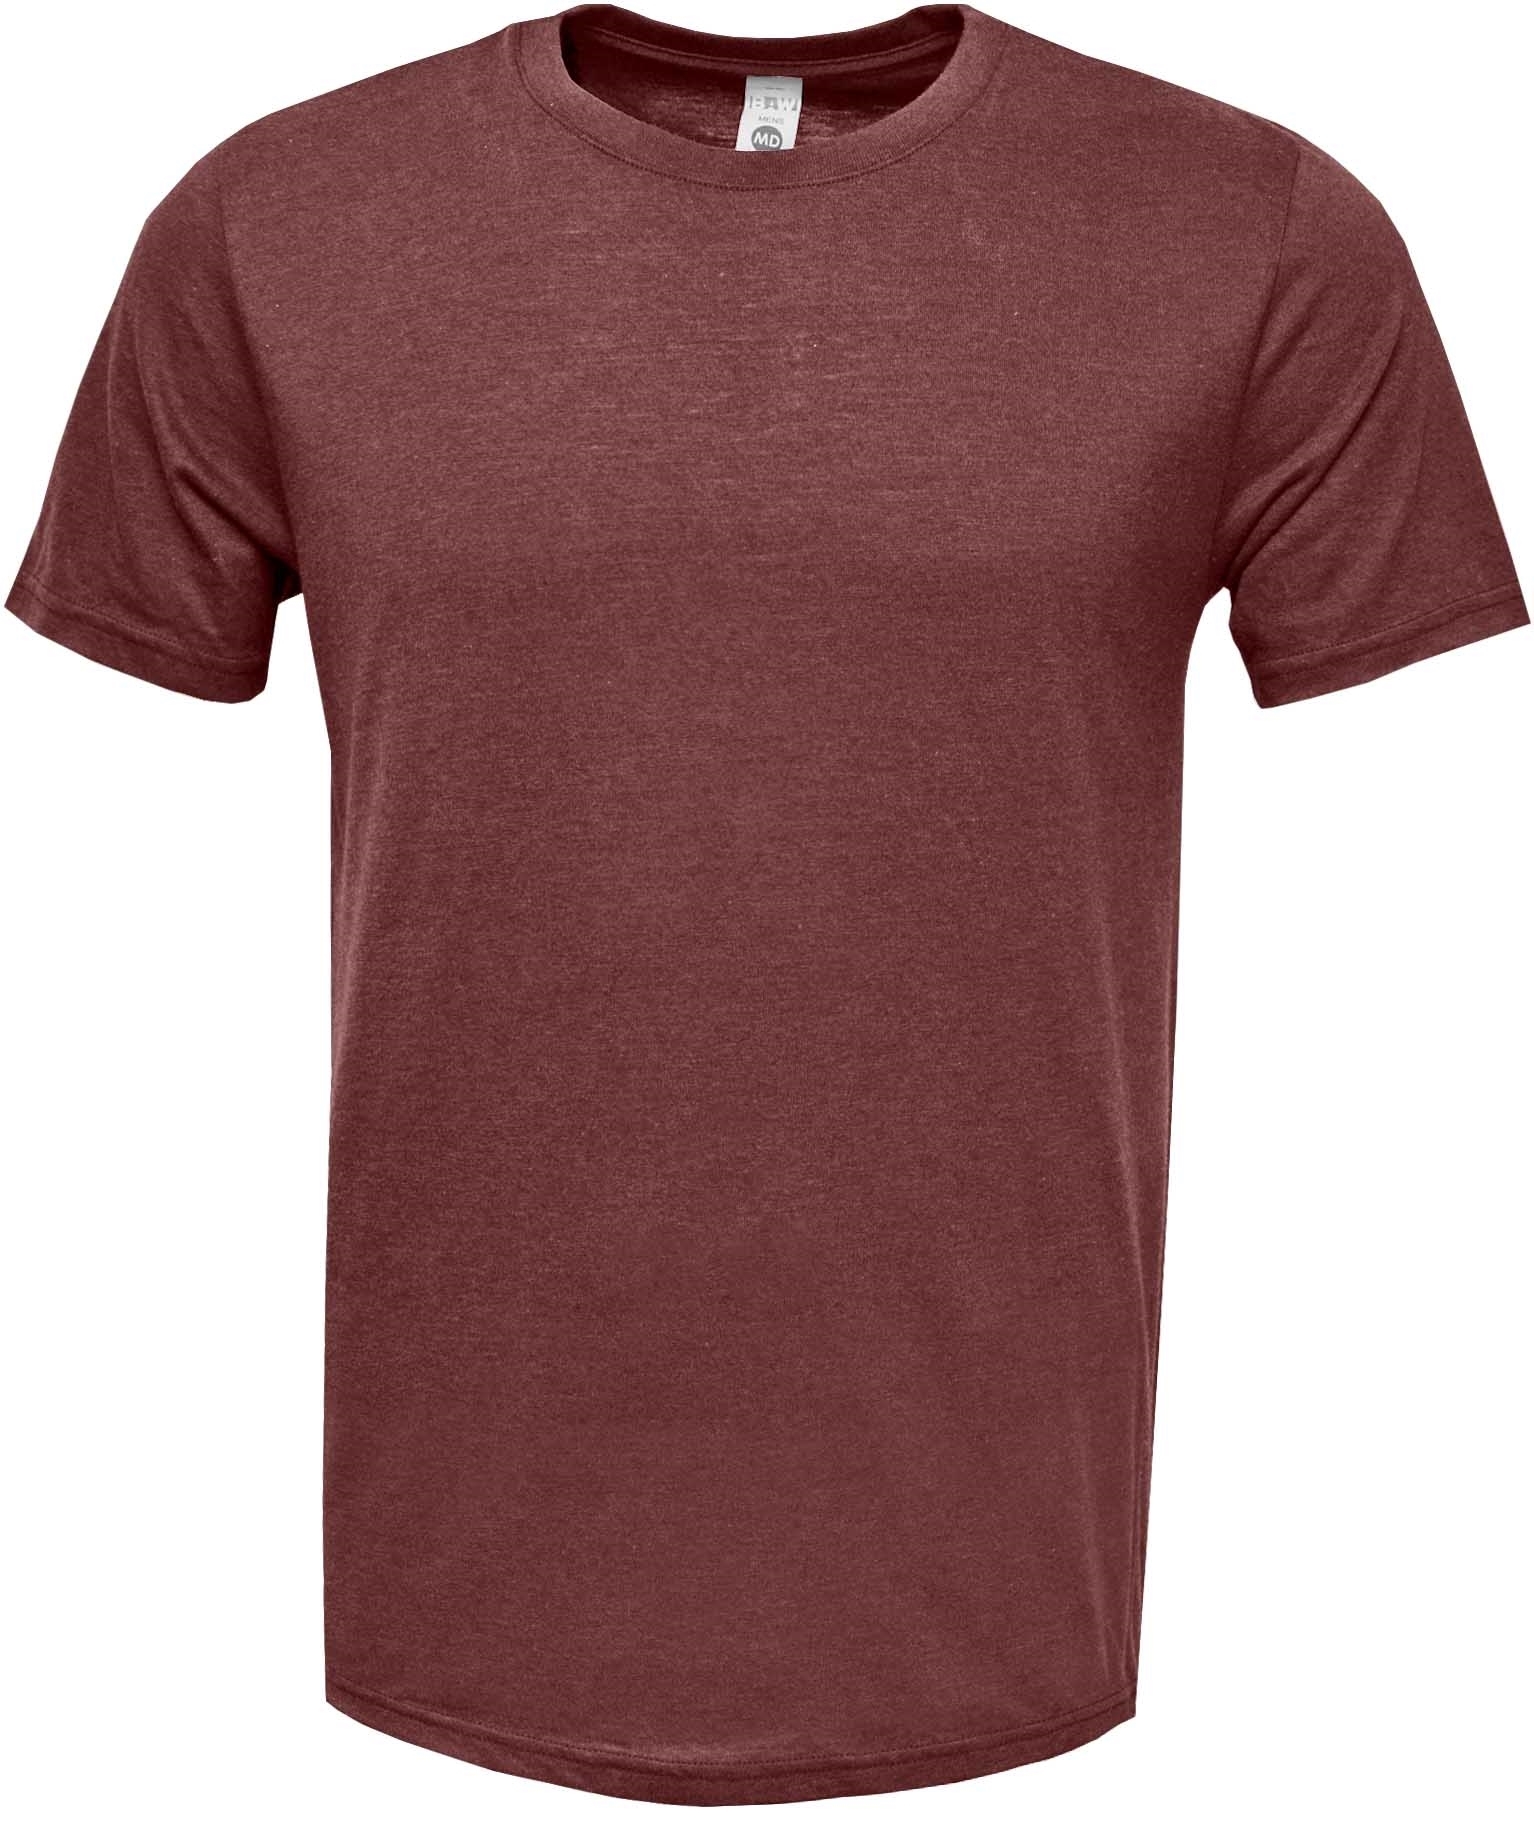 BAW Athletic Wear PC176 - Adult Soft-Tek Blend T-Shirt